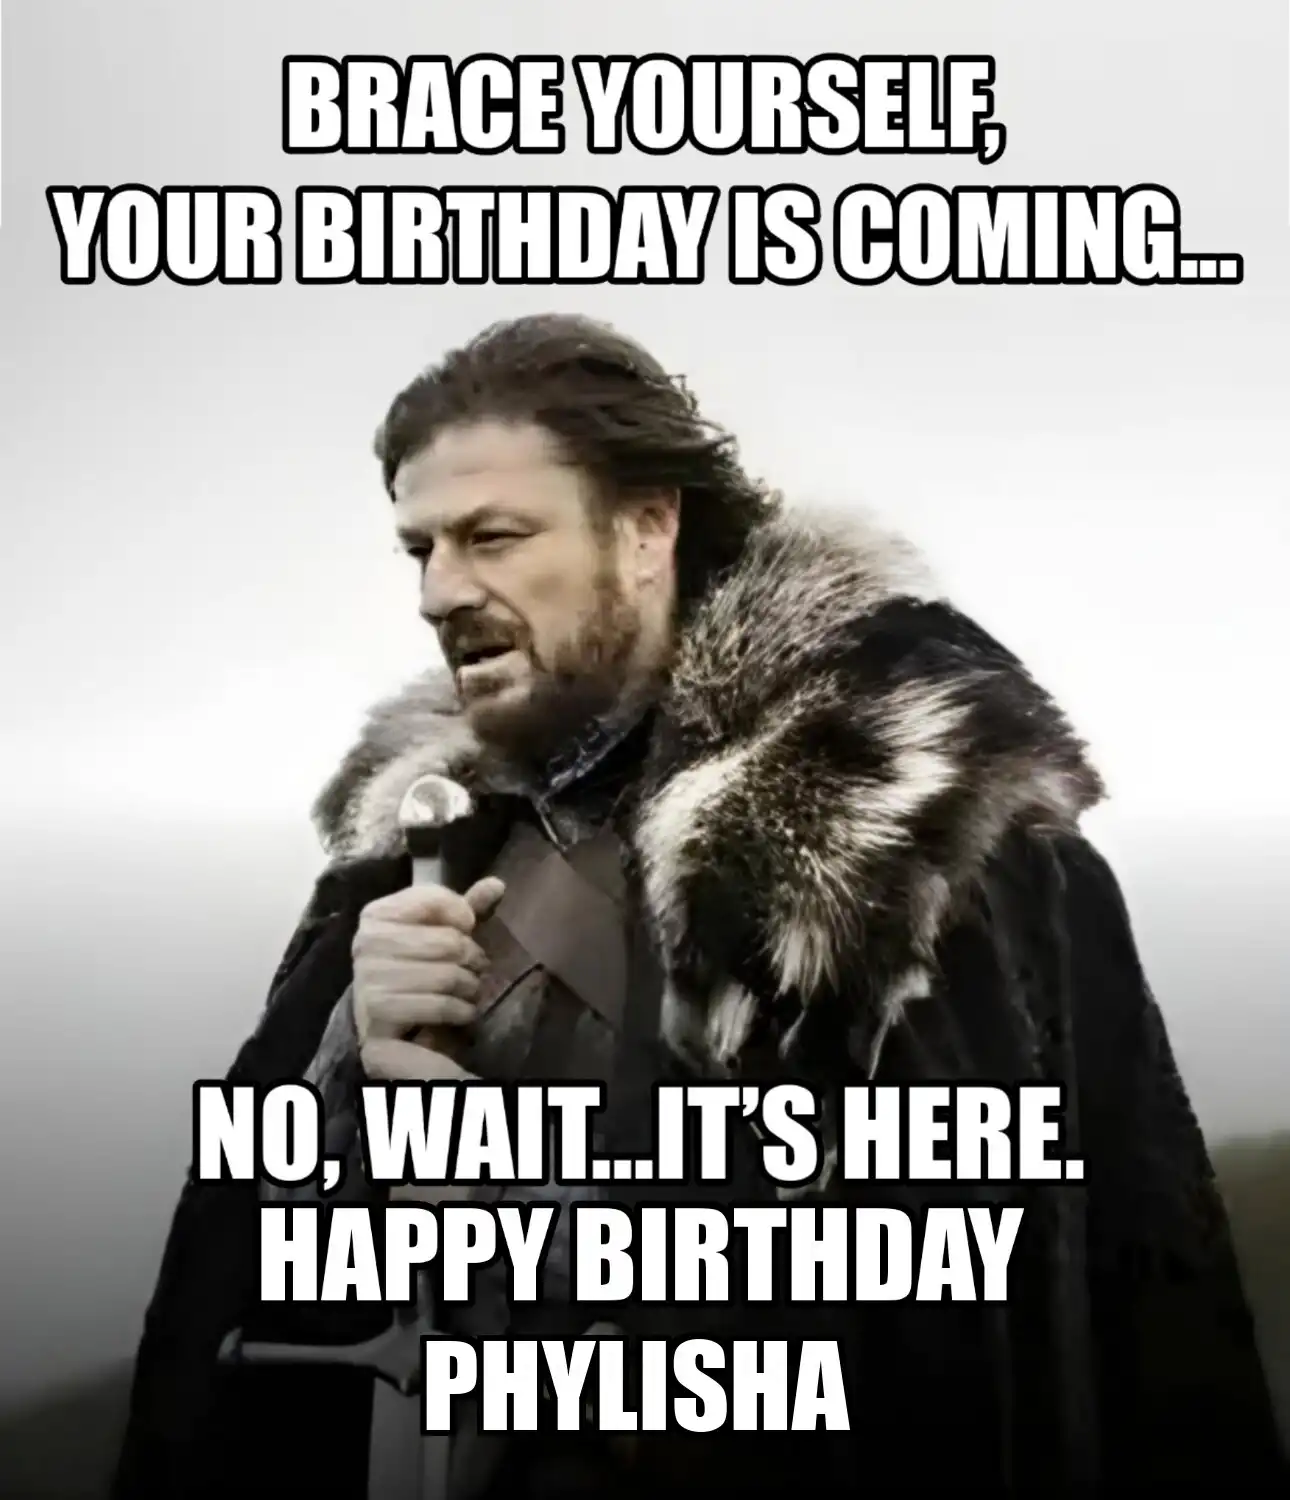 Happy Birthday Phylisha Brace Yourself Your Birthday Is Coming Meme